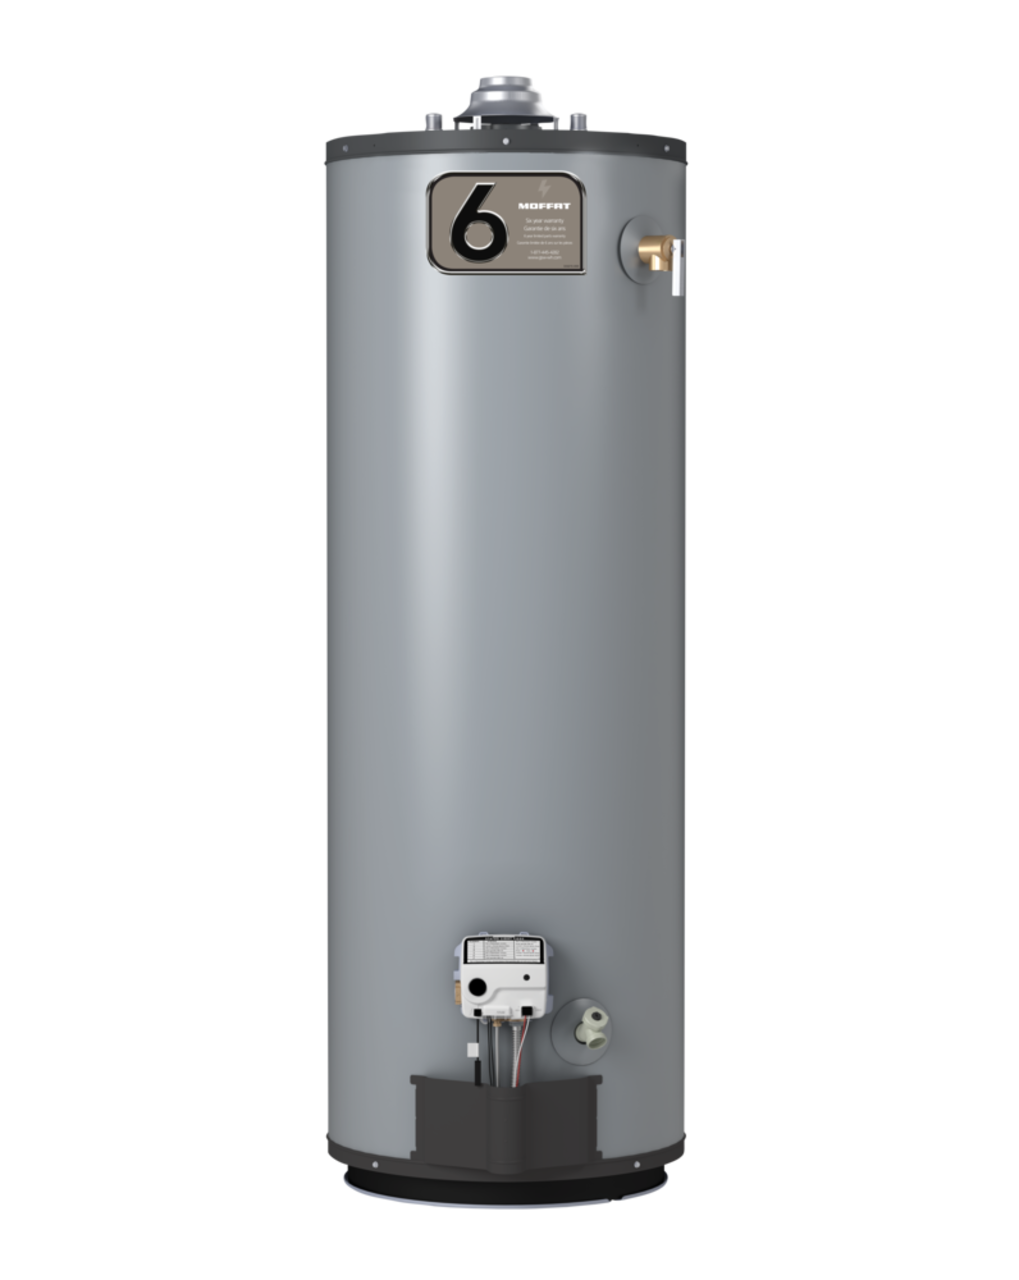 Chauffe-eau à gaz classique Moffat G640S40N-AV, 151 l, 40 000 BTU,  métallique